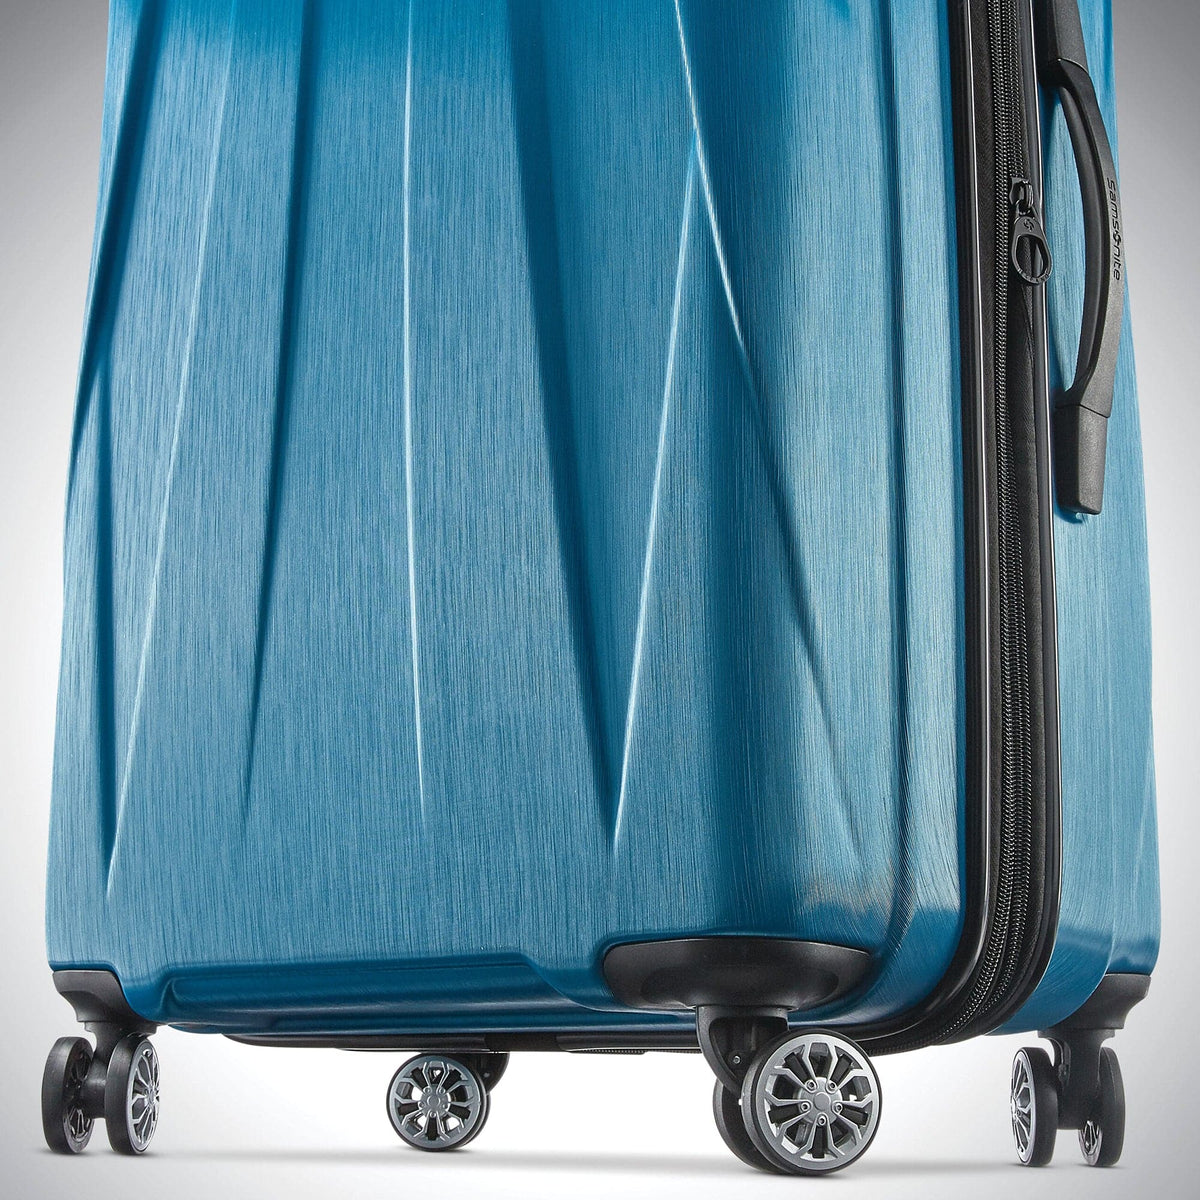 Samsonite Centric 2 Large Spinner Luggage